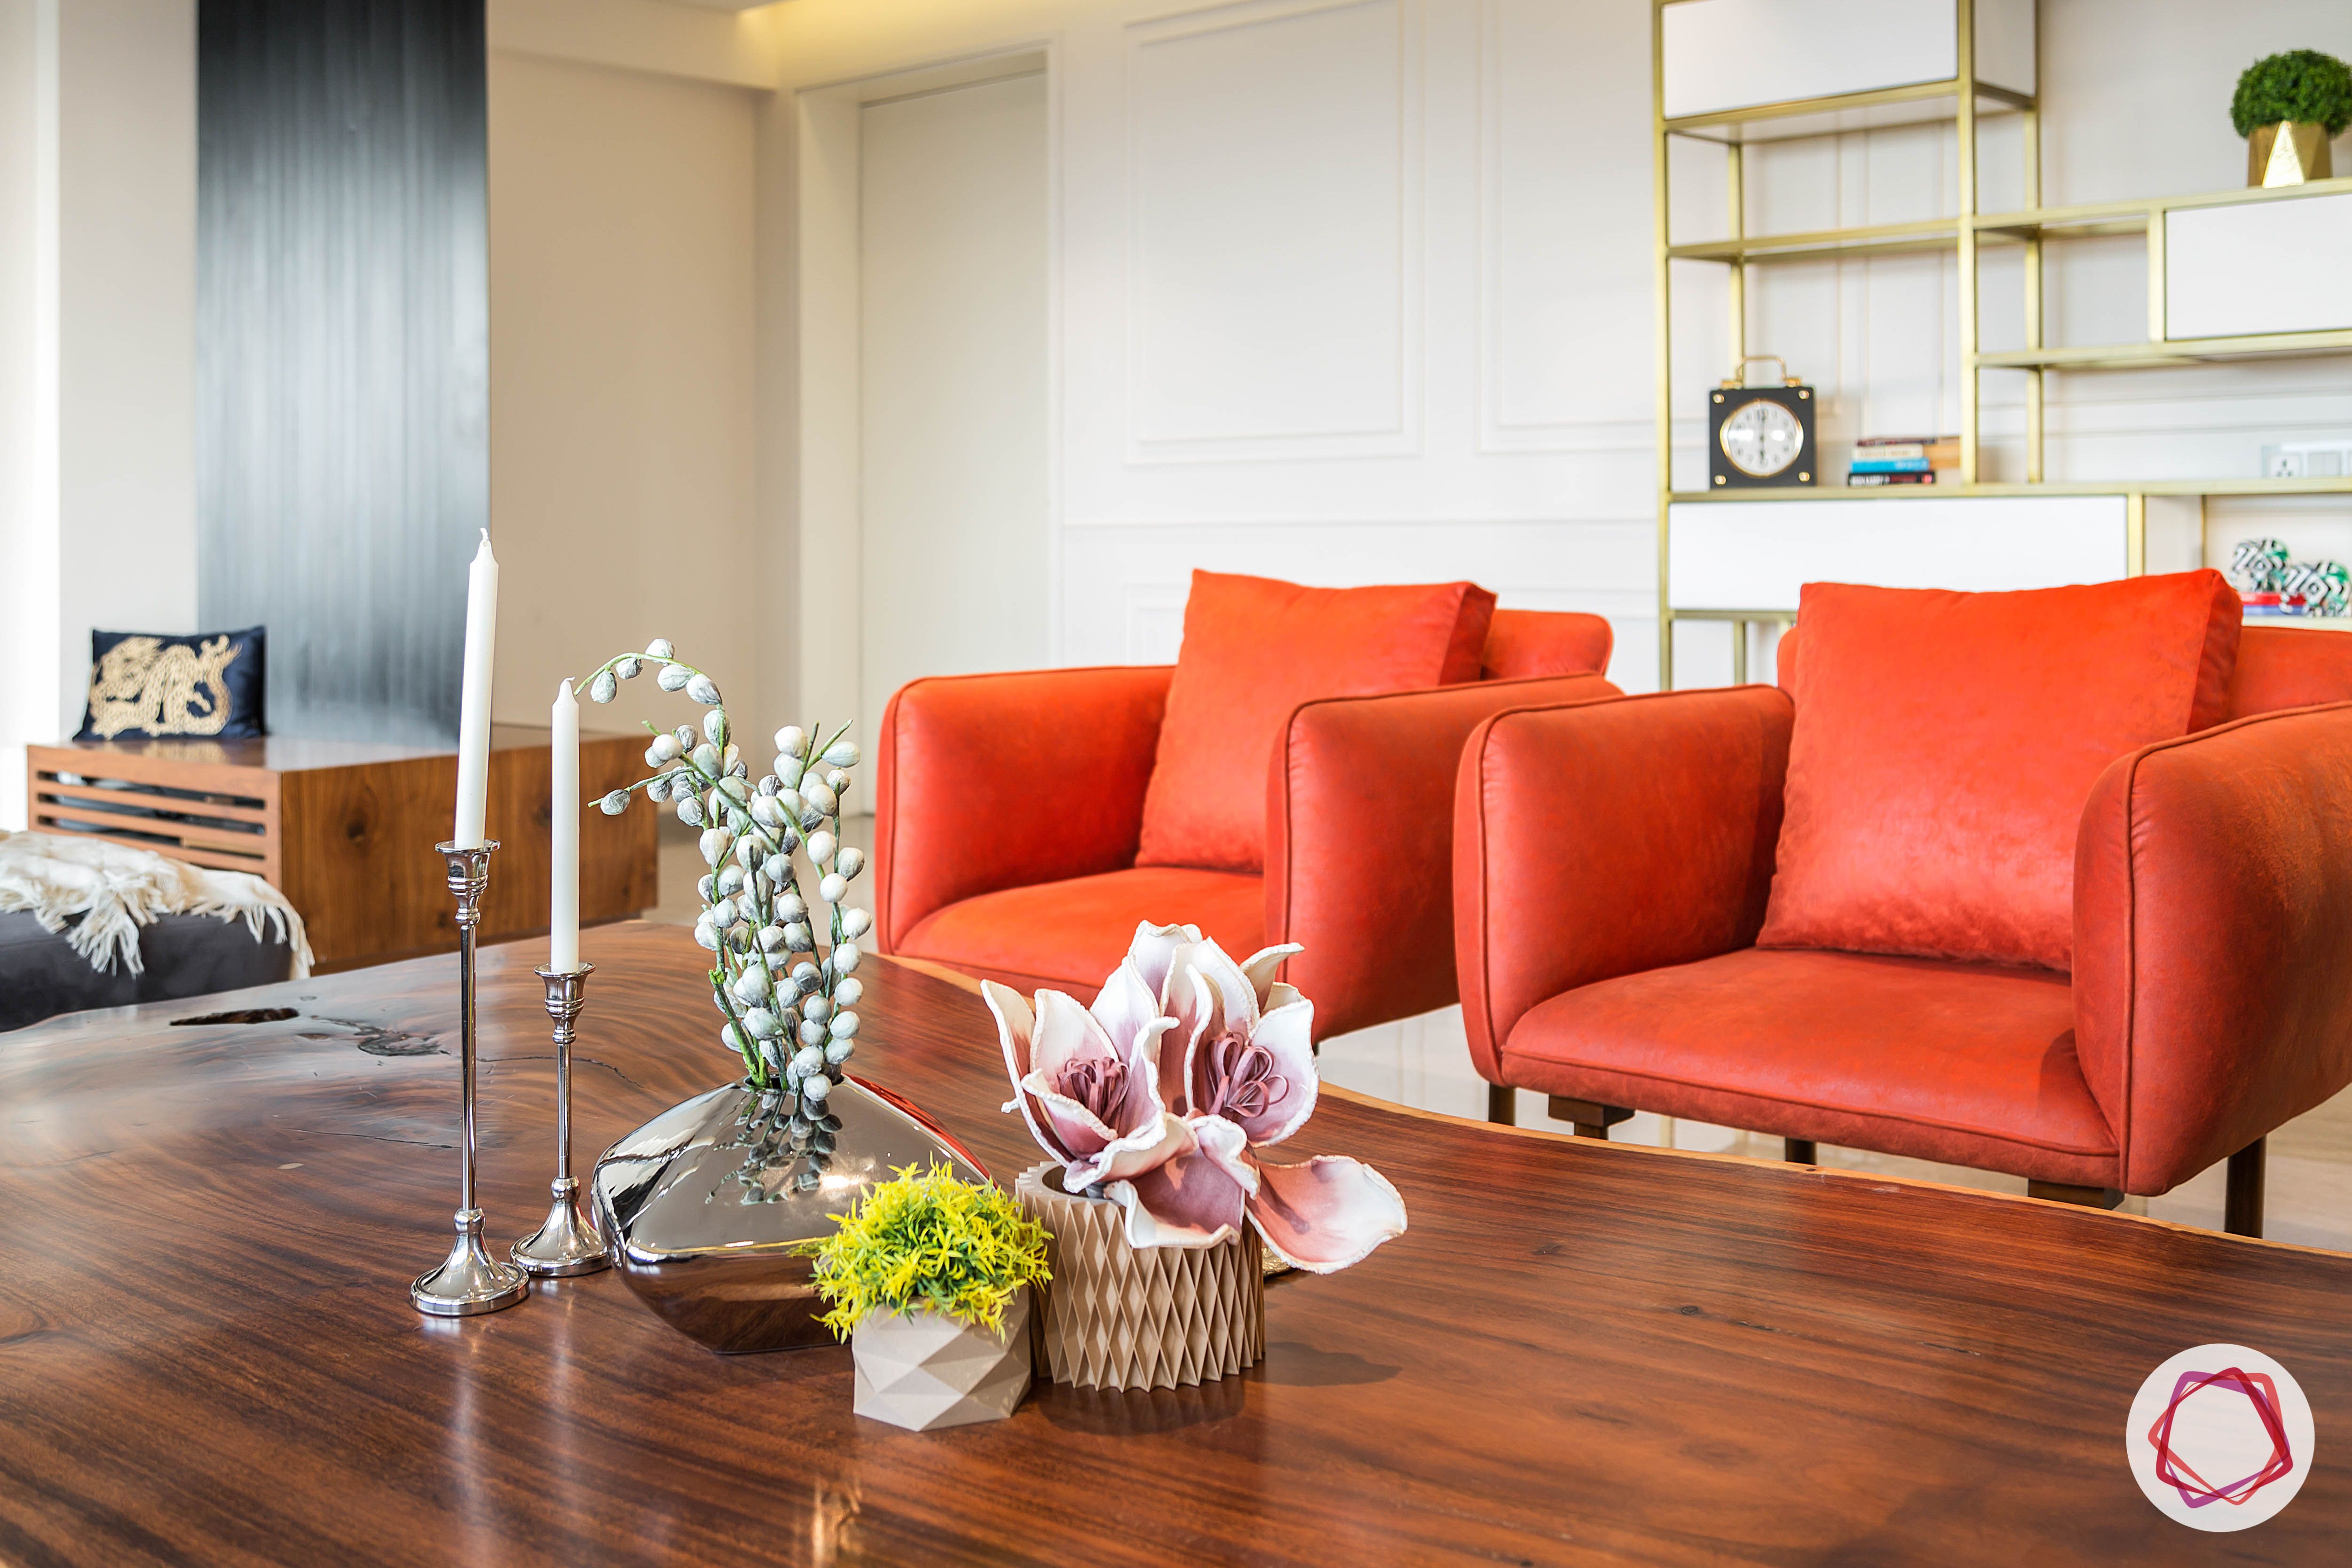 condo-interior-design-orange-armchairs-wooden-coffee-table